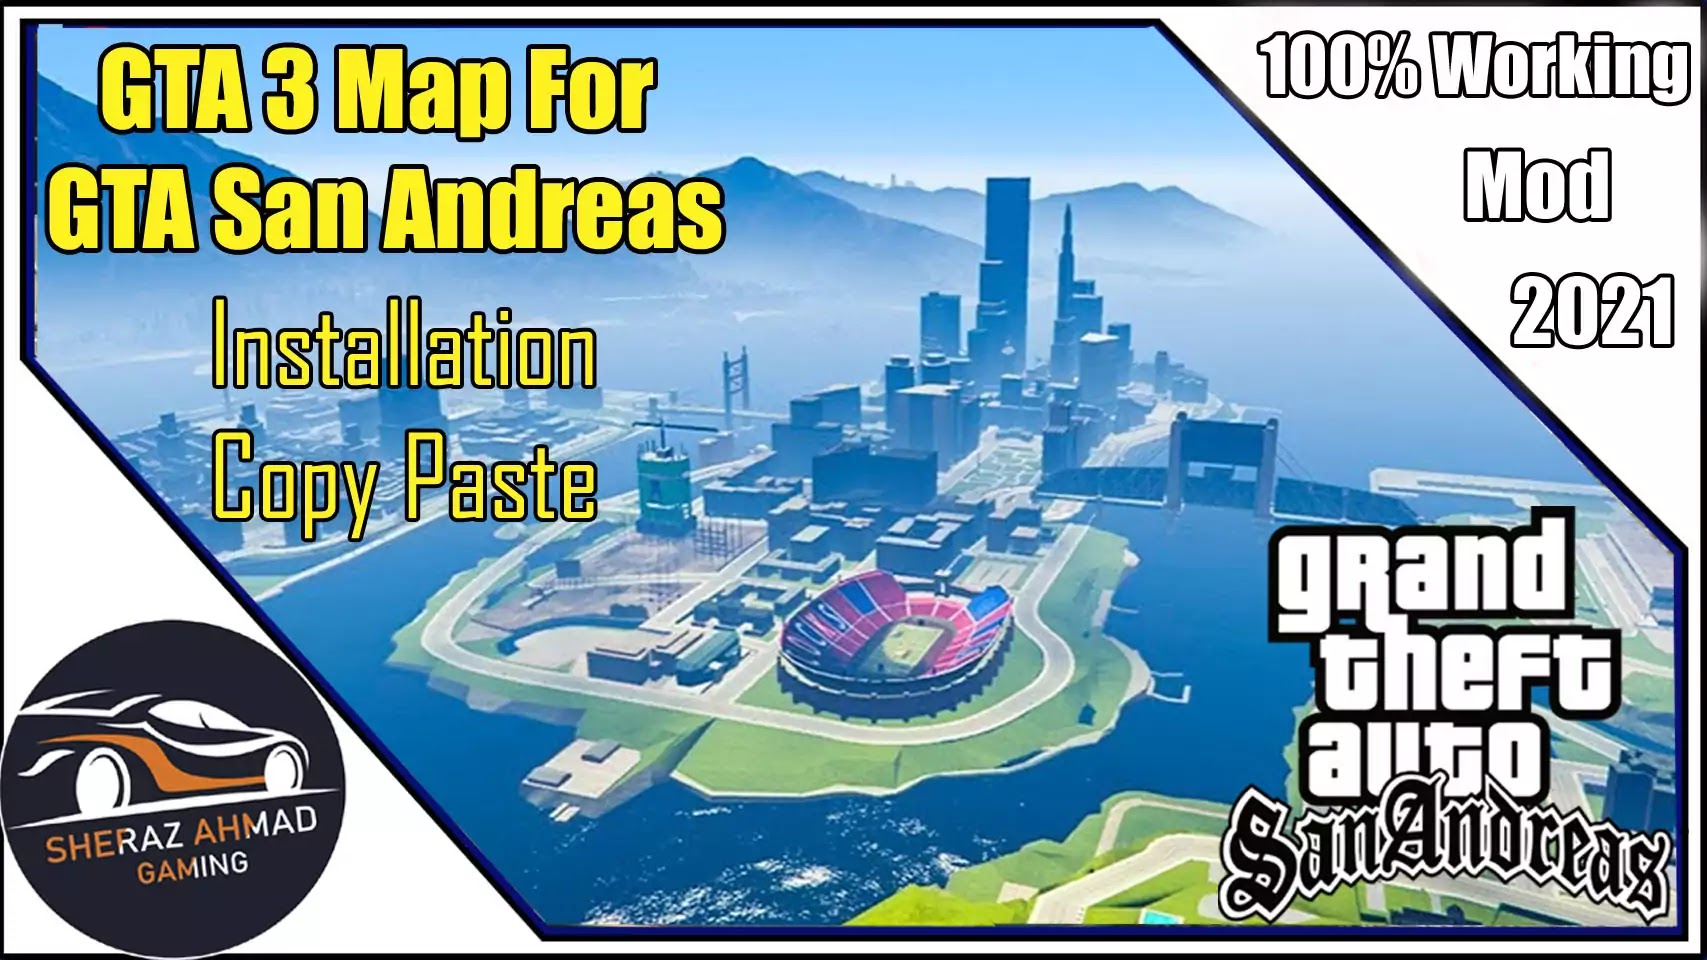 Download GTA 3 Map For GTA San Andreas - Sheraz Ahmad Gaming